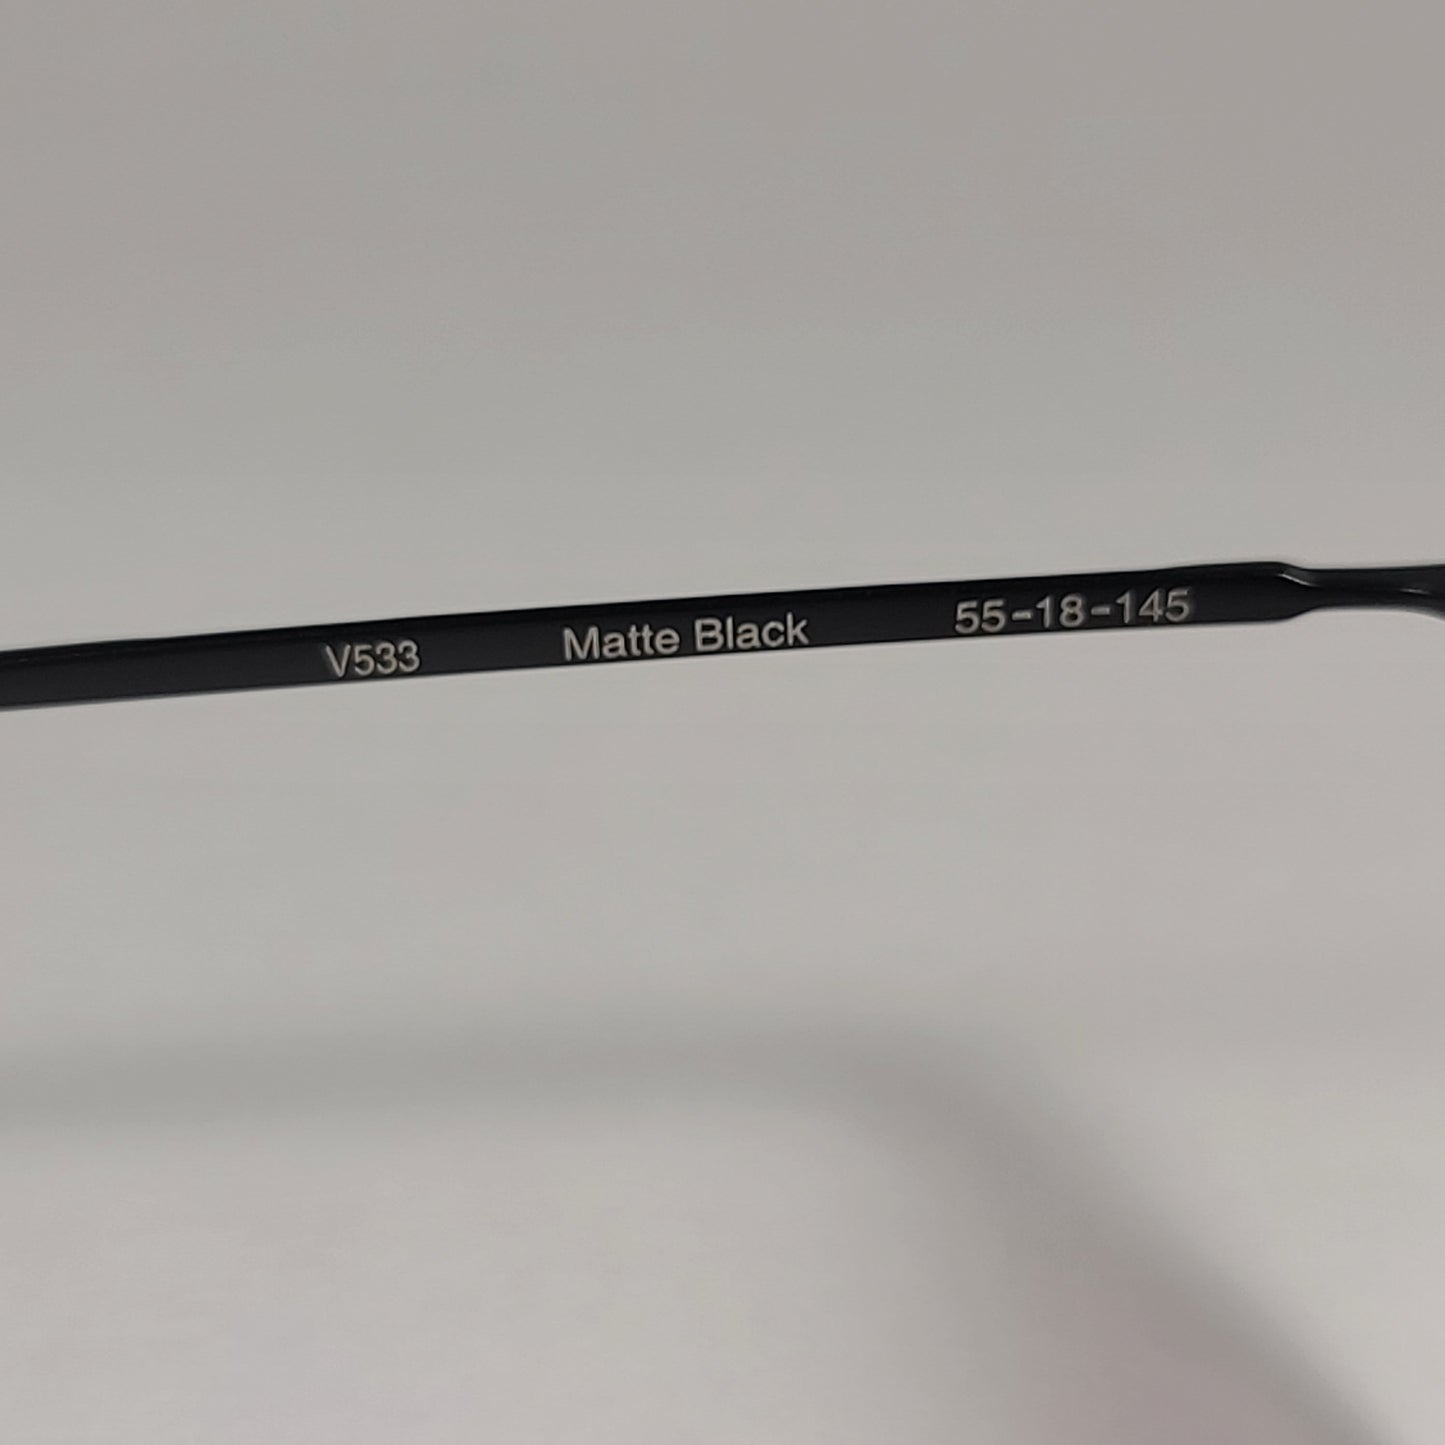 John Varvatos Men’s Pilot Sunglasses V533 Matte Black Frame Brown Gradient Lens - Sunglasses